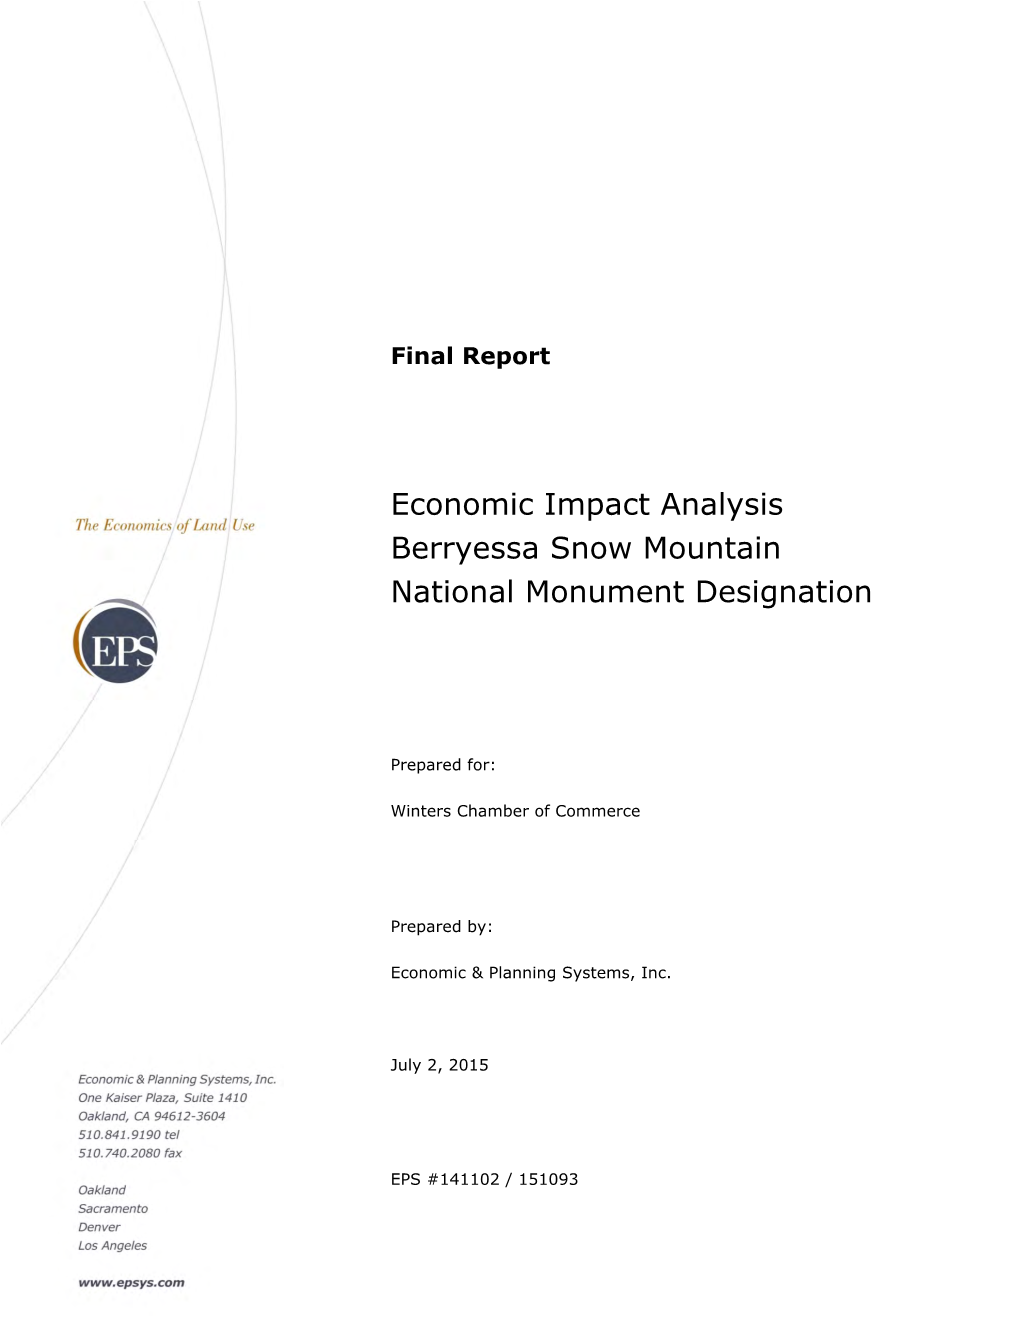 Economic Impact Analysis Berryessa Snow Mountain National Monument Designation